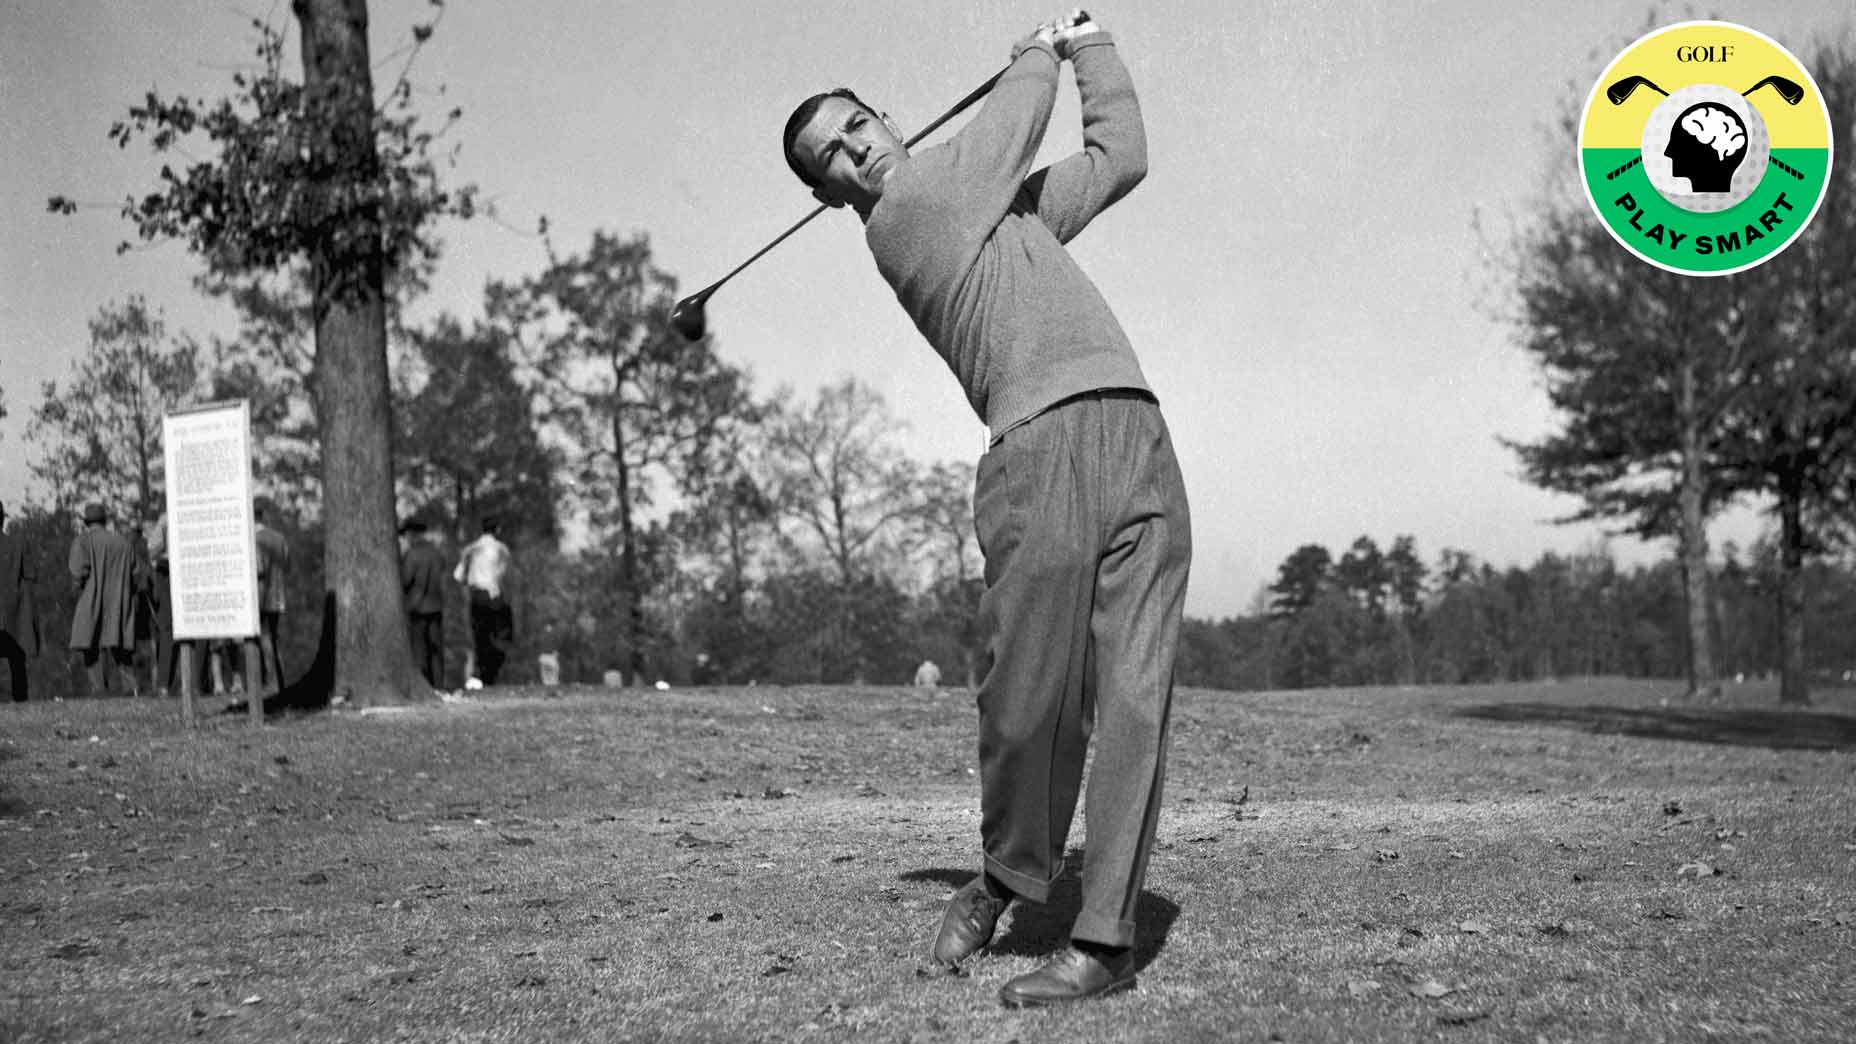 ben hogan swings a golf club in black-and-white photo